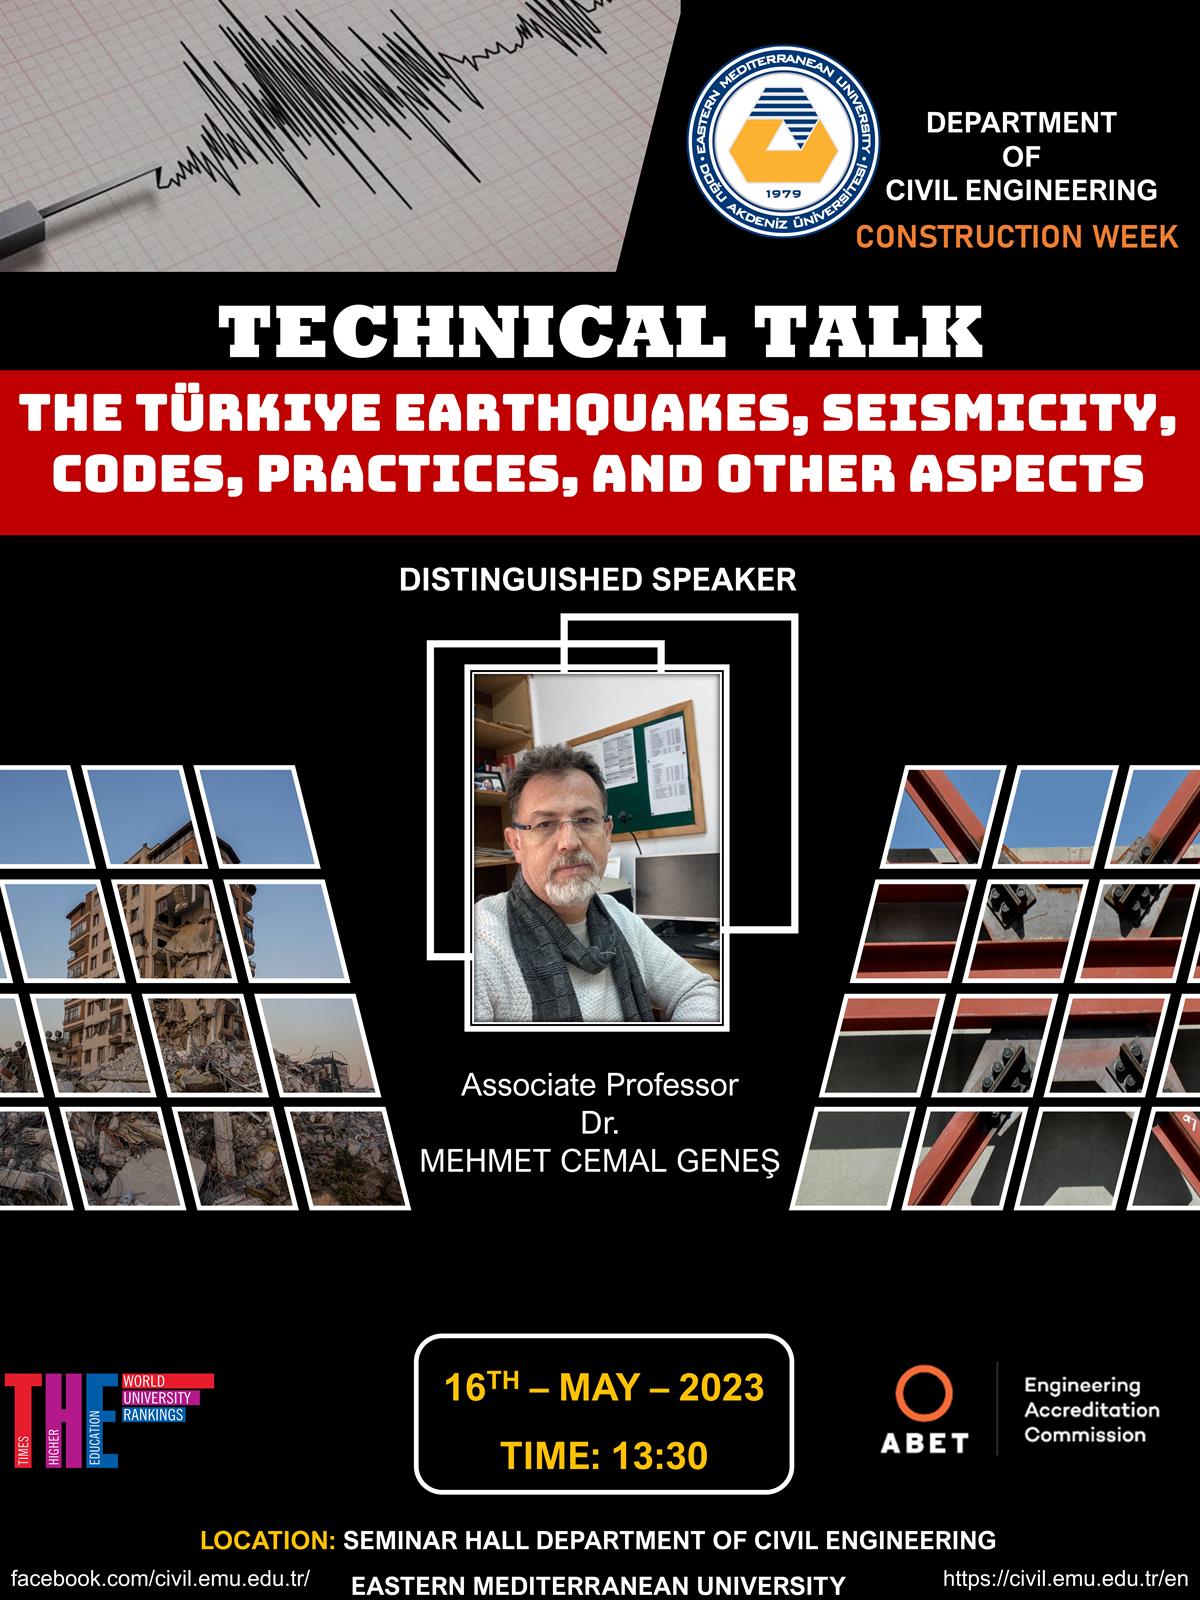 Technical Talk by Associate Professor Dr. Mehmet Cemal Genes